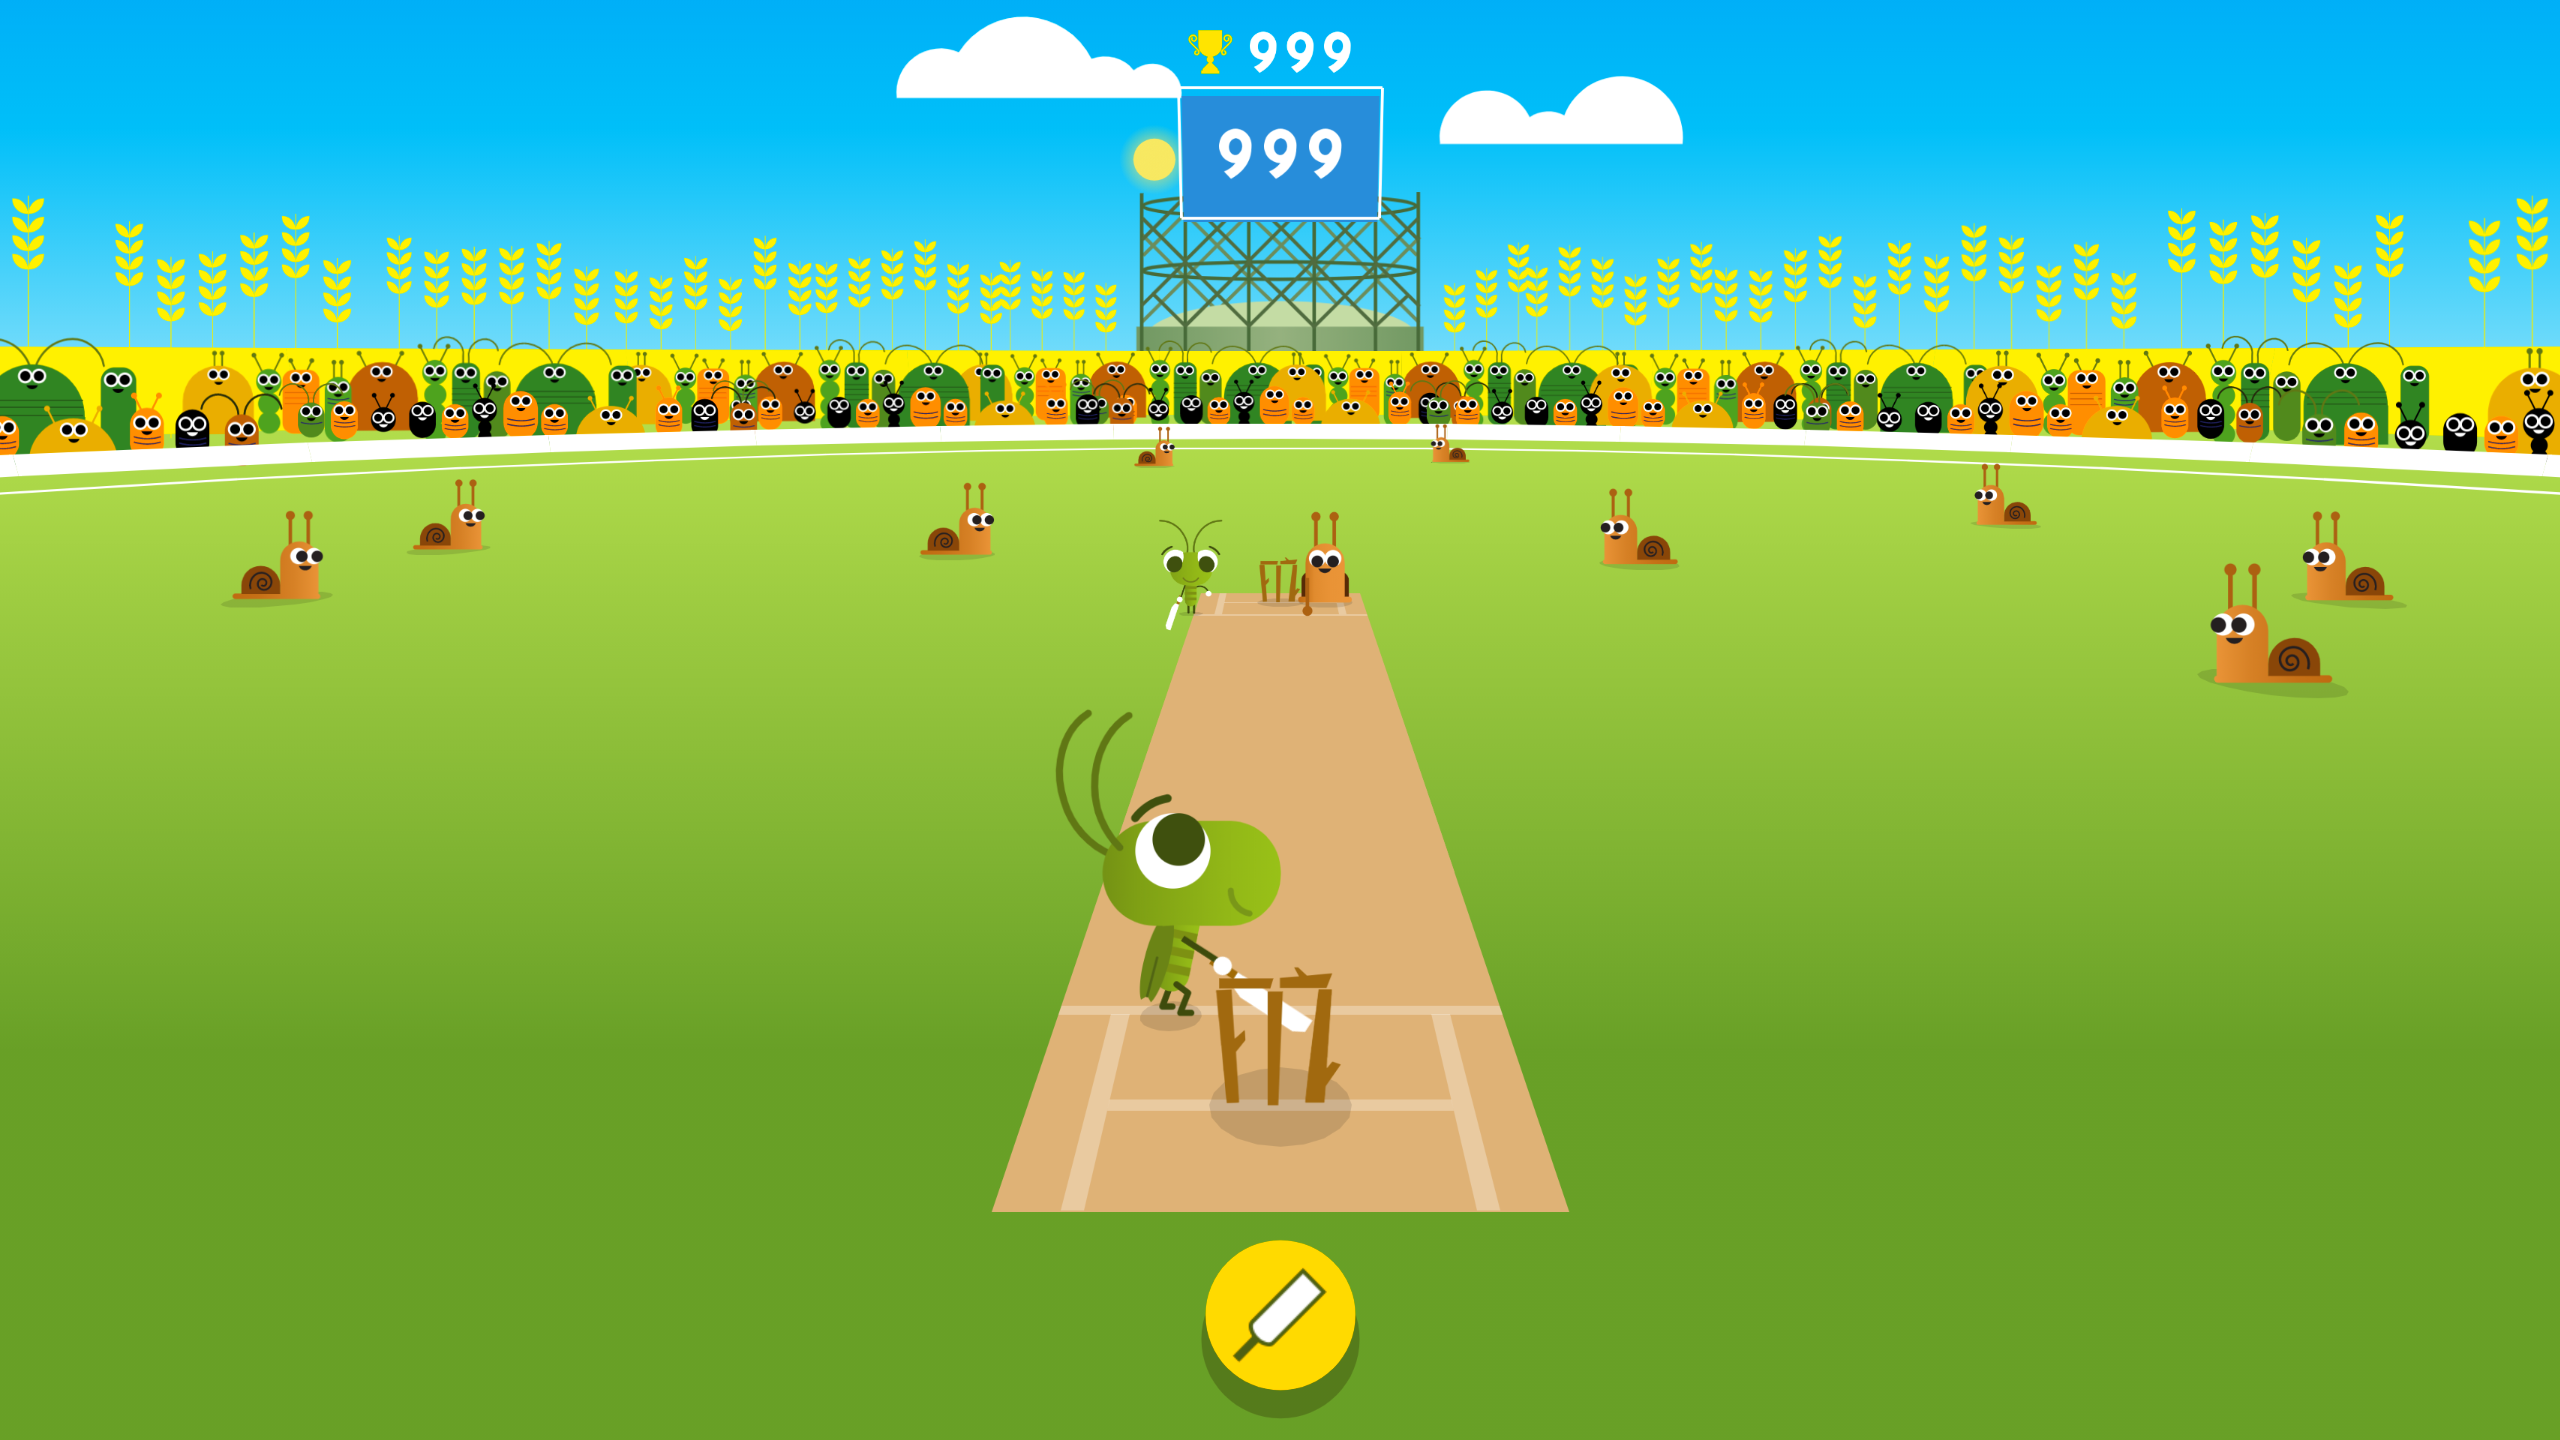 Google Doodle Cricket 999 points